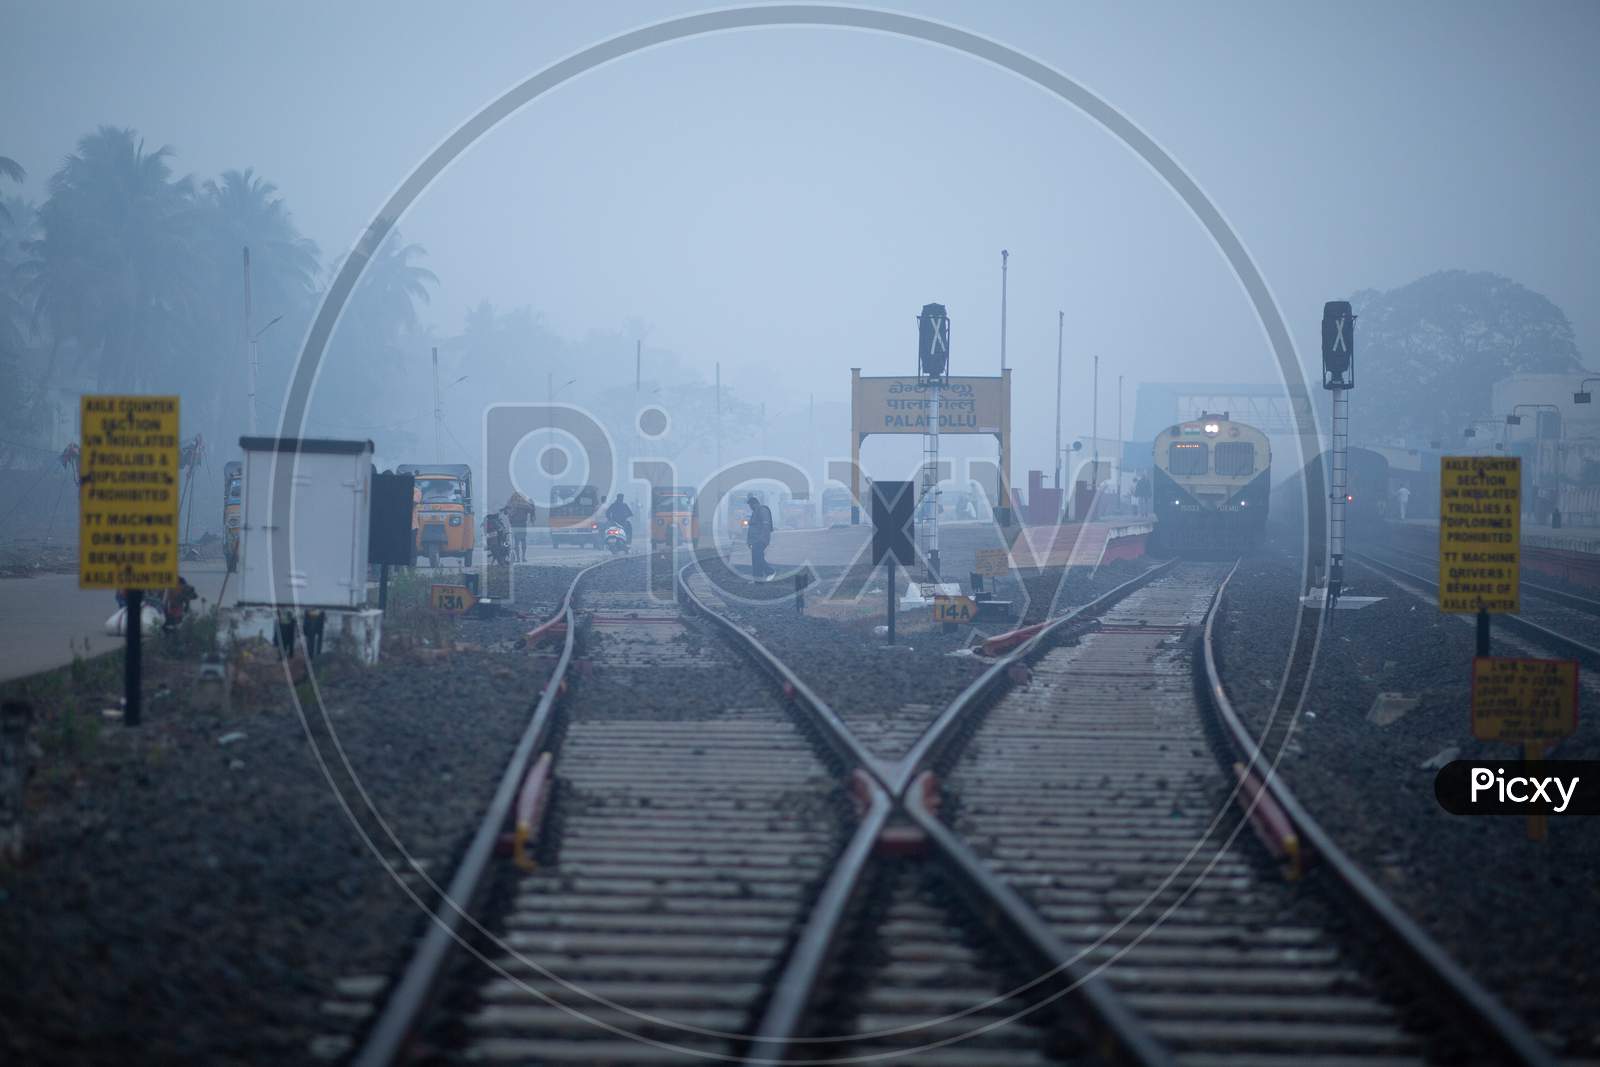 Railway Crossing Tracks At Palakollu Railway Station